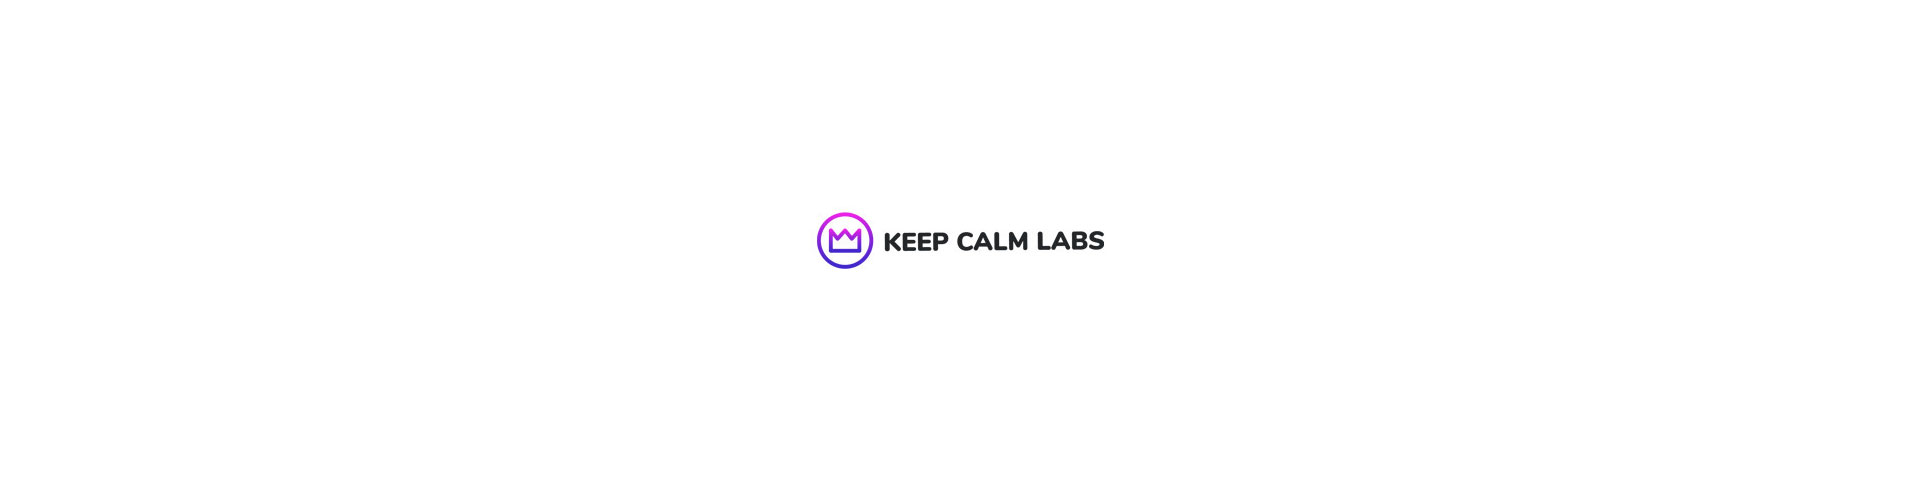 Keep Calm Labs